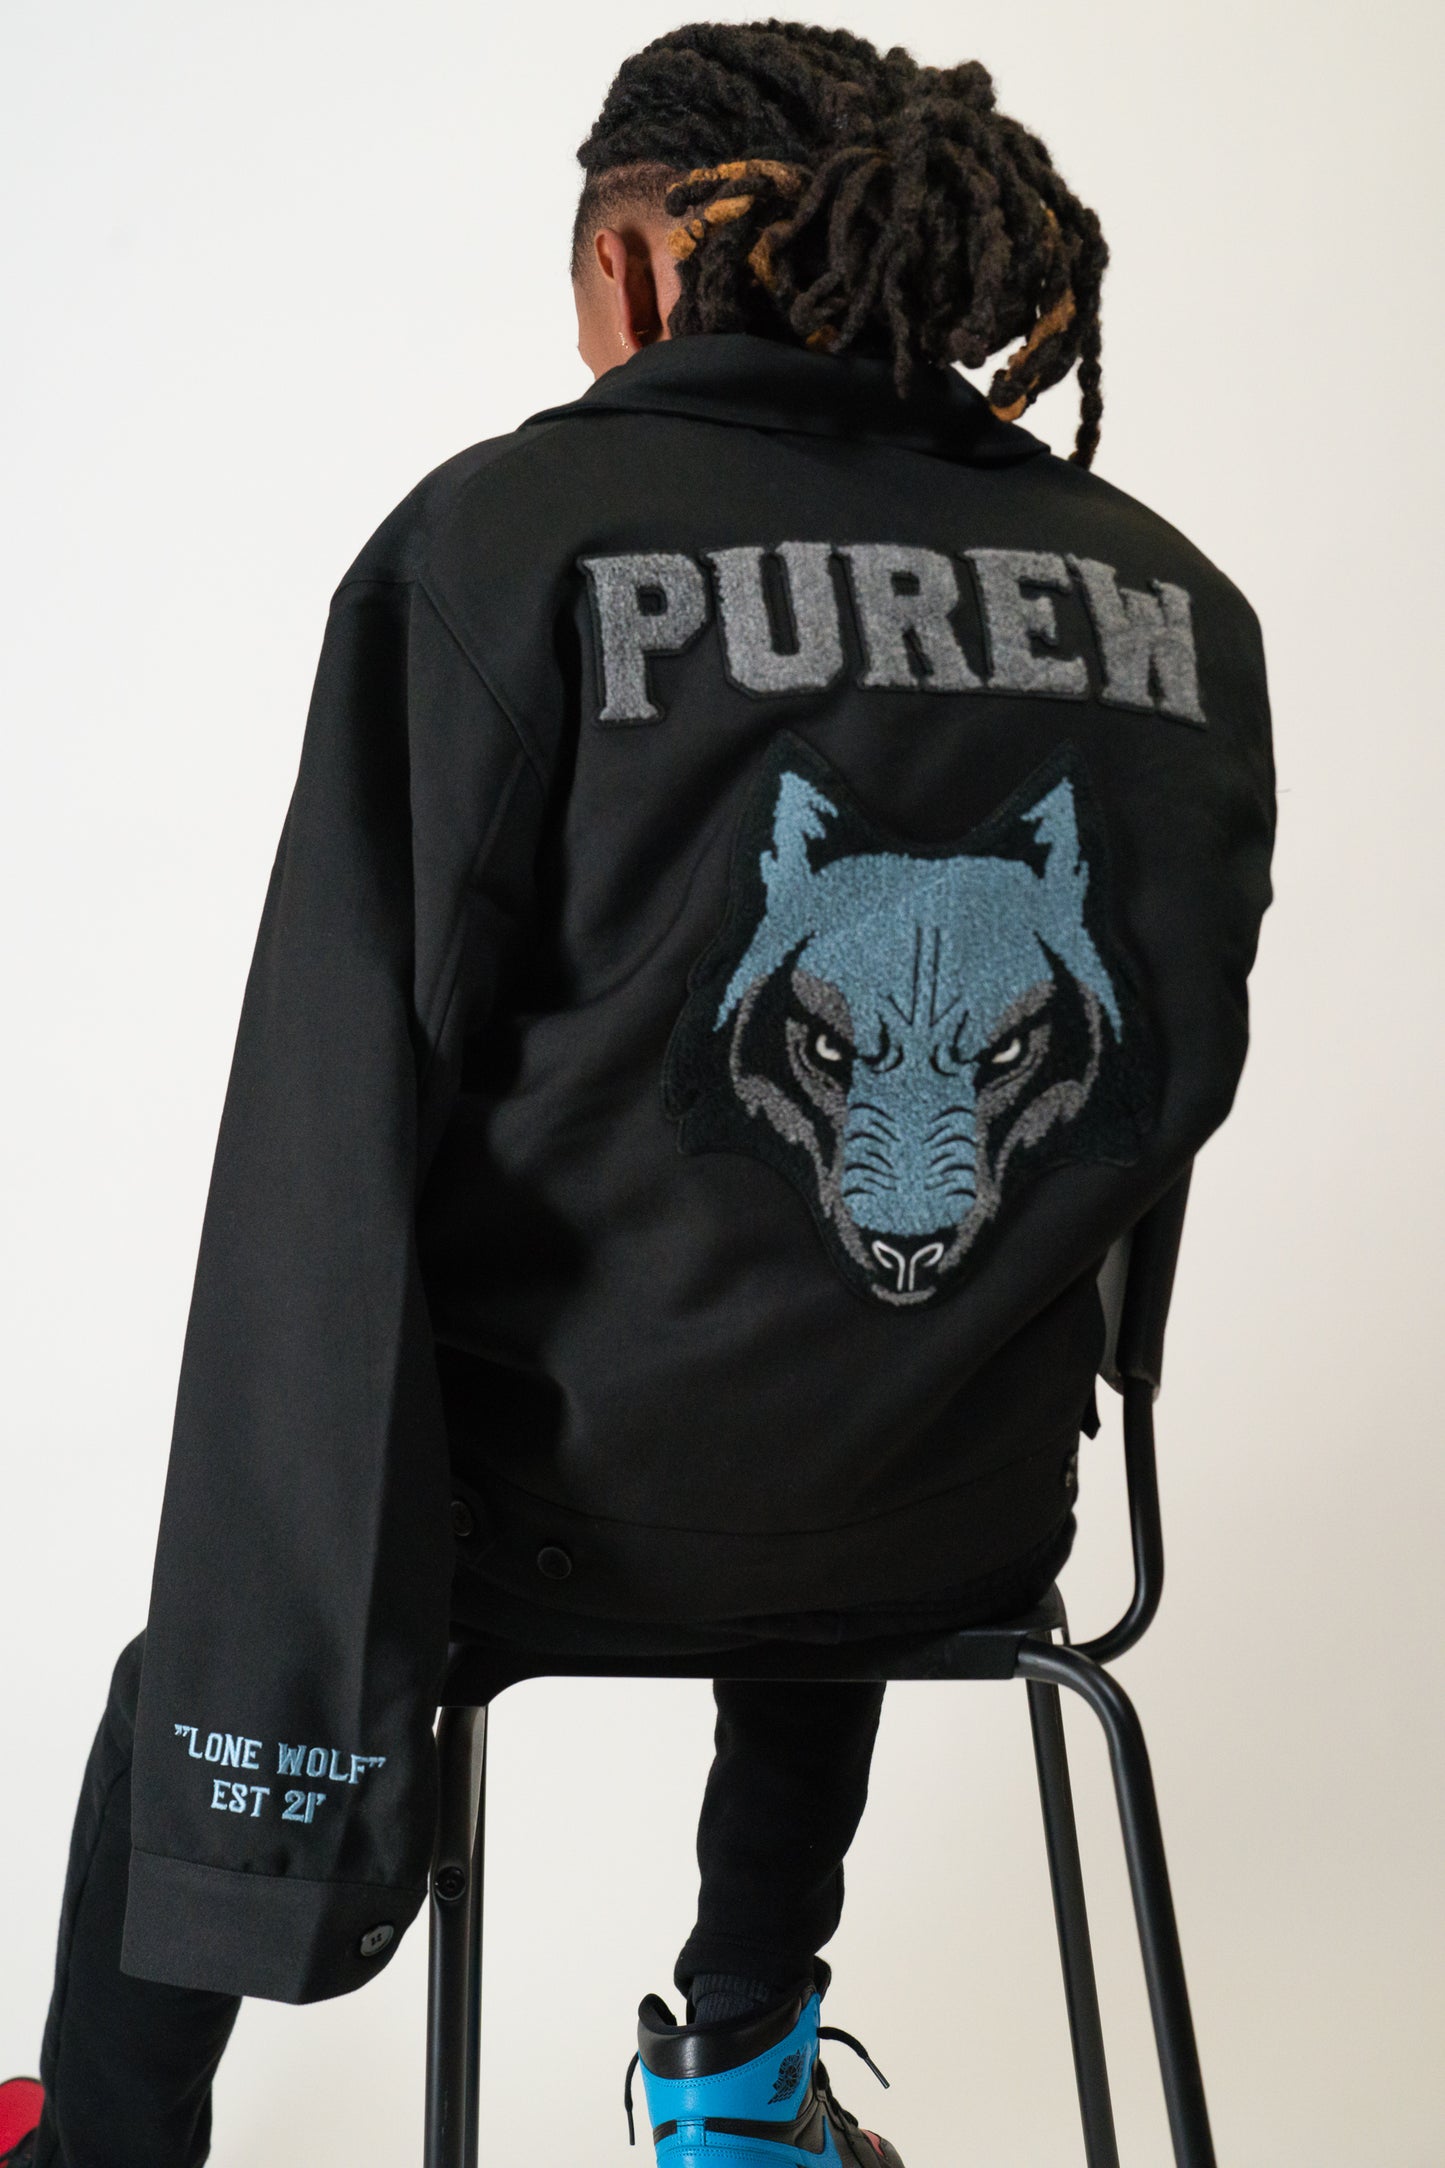 Purew "Lone Wolf Workman" Jacket